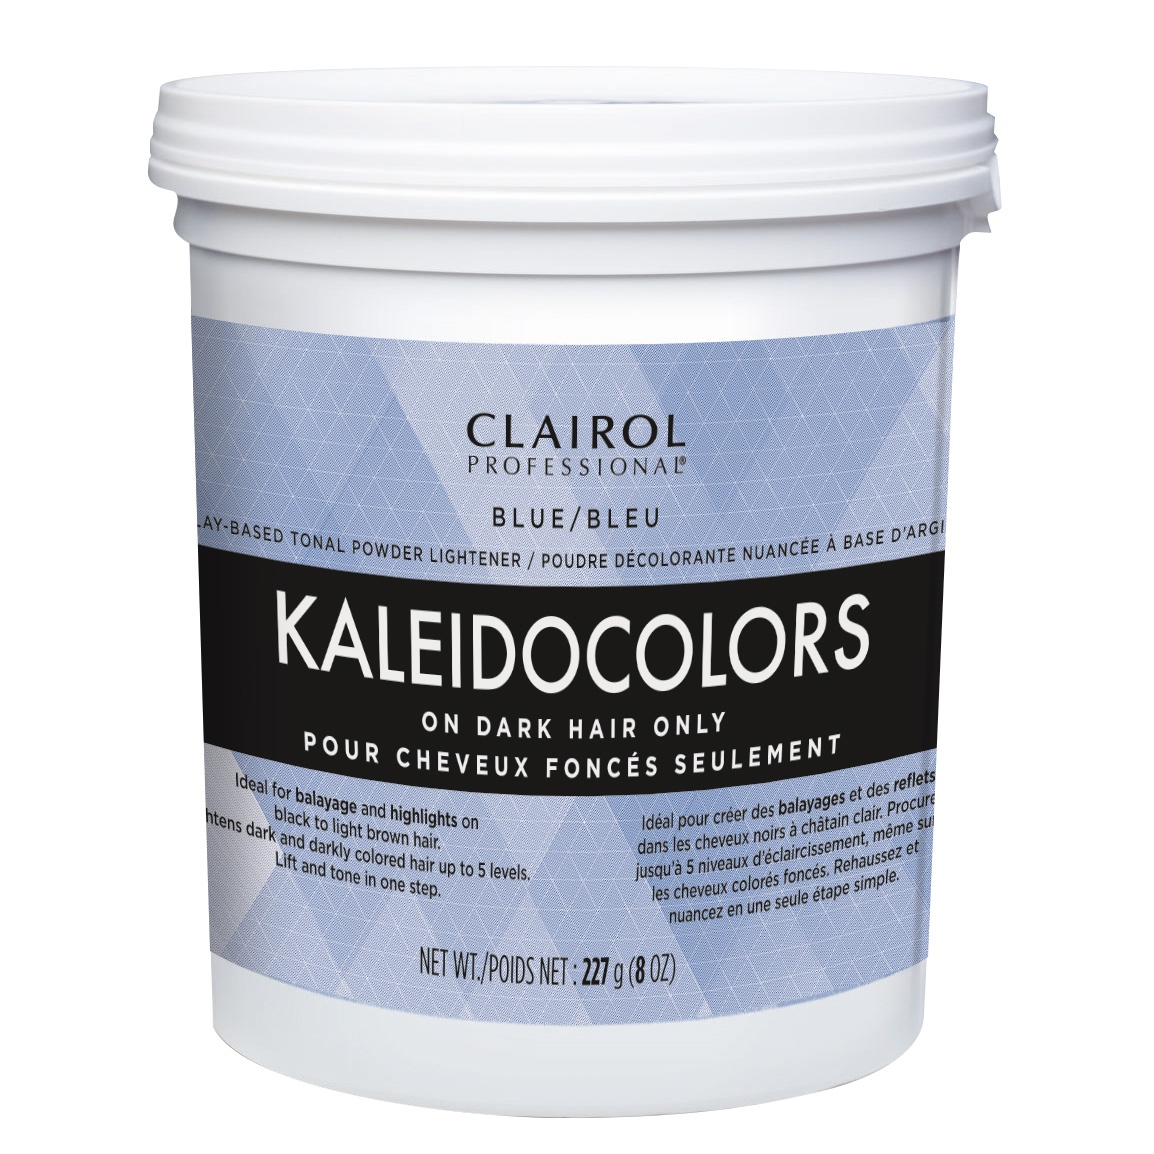 Clairol Kaleidocolor Blue